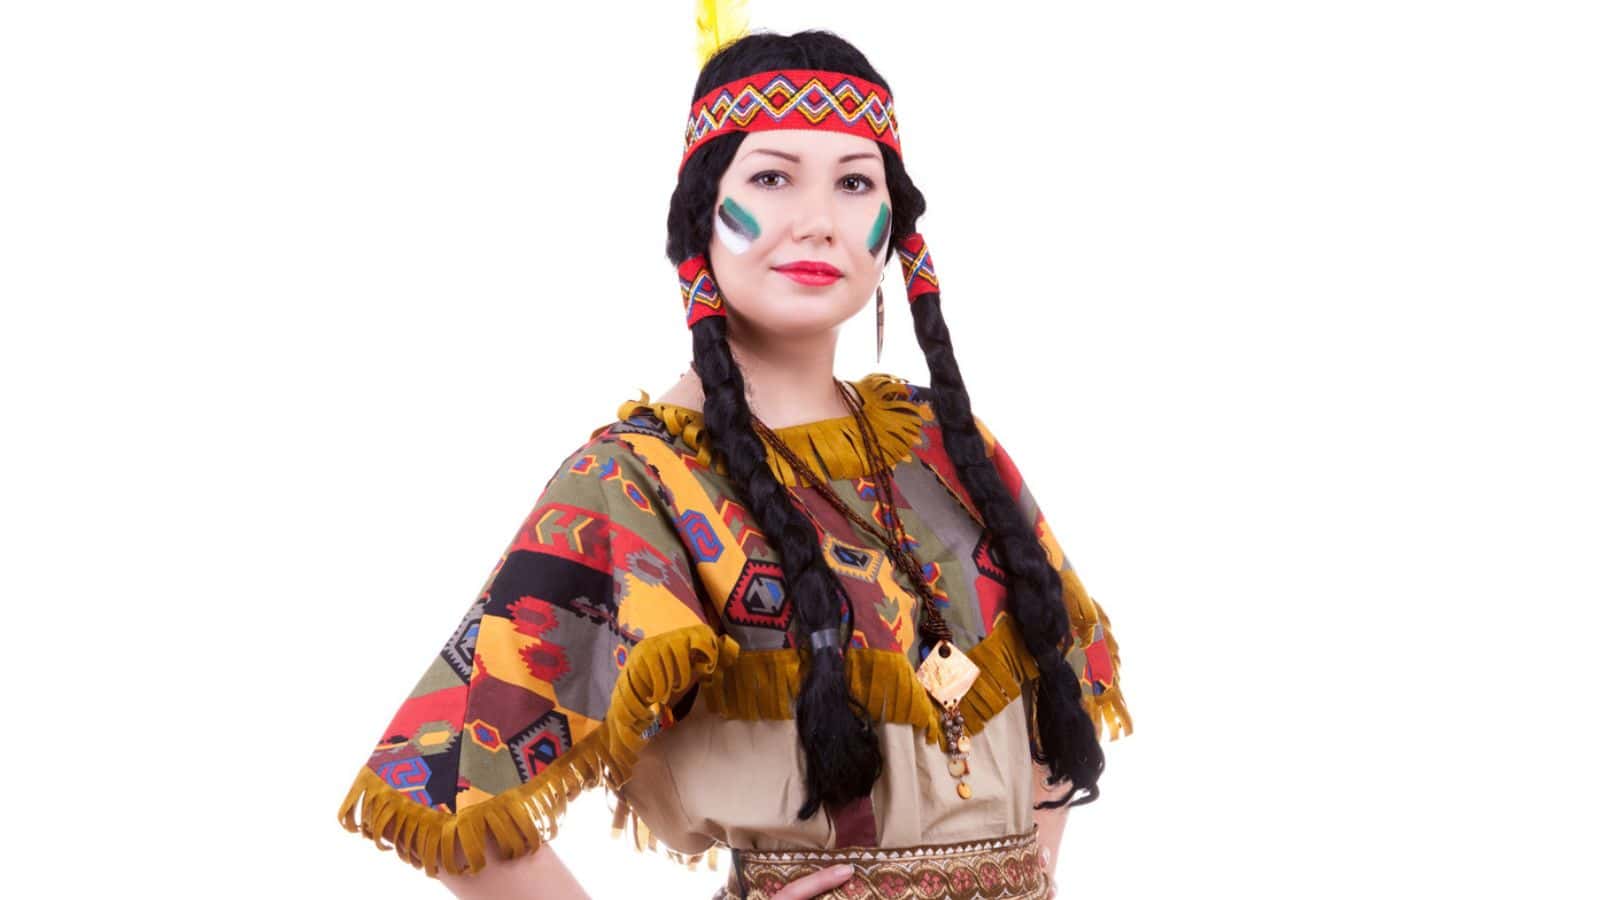 Beautiful native american woman on white background